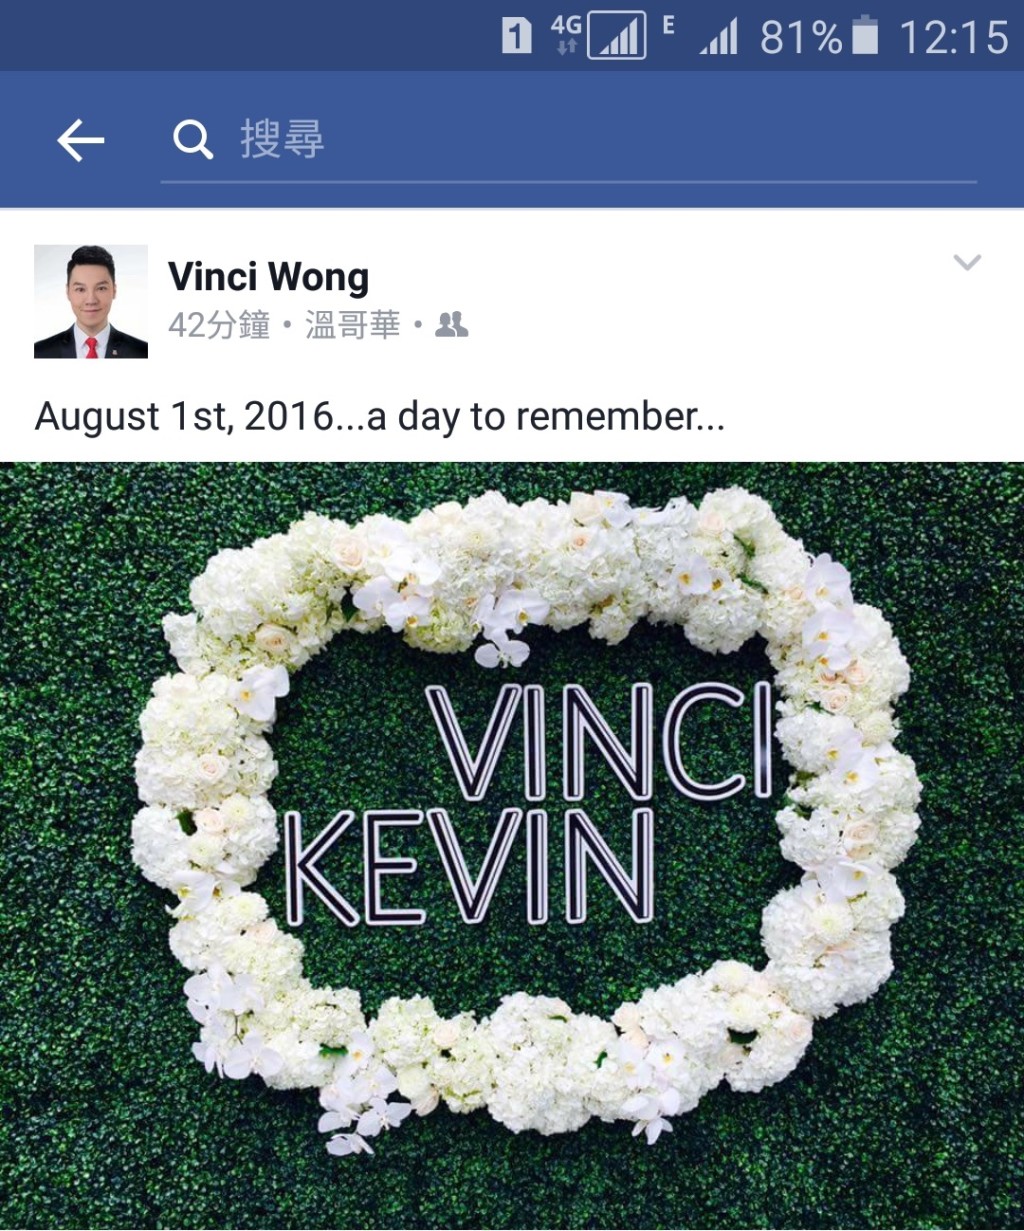 Vinci 和Kevin是香港娛樂圈首宗公開的同性婚姻。